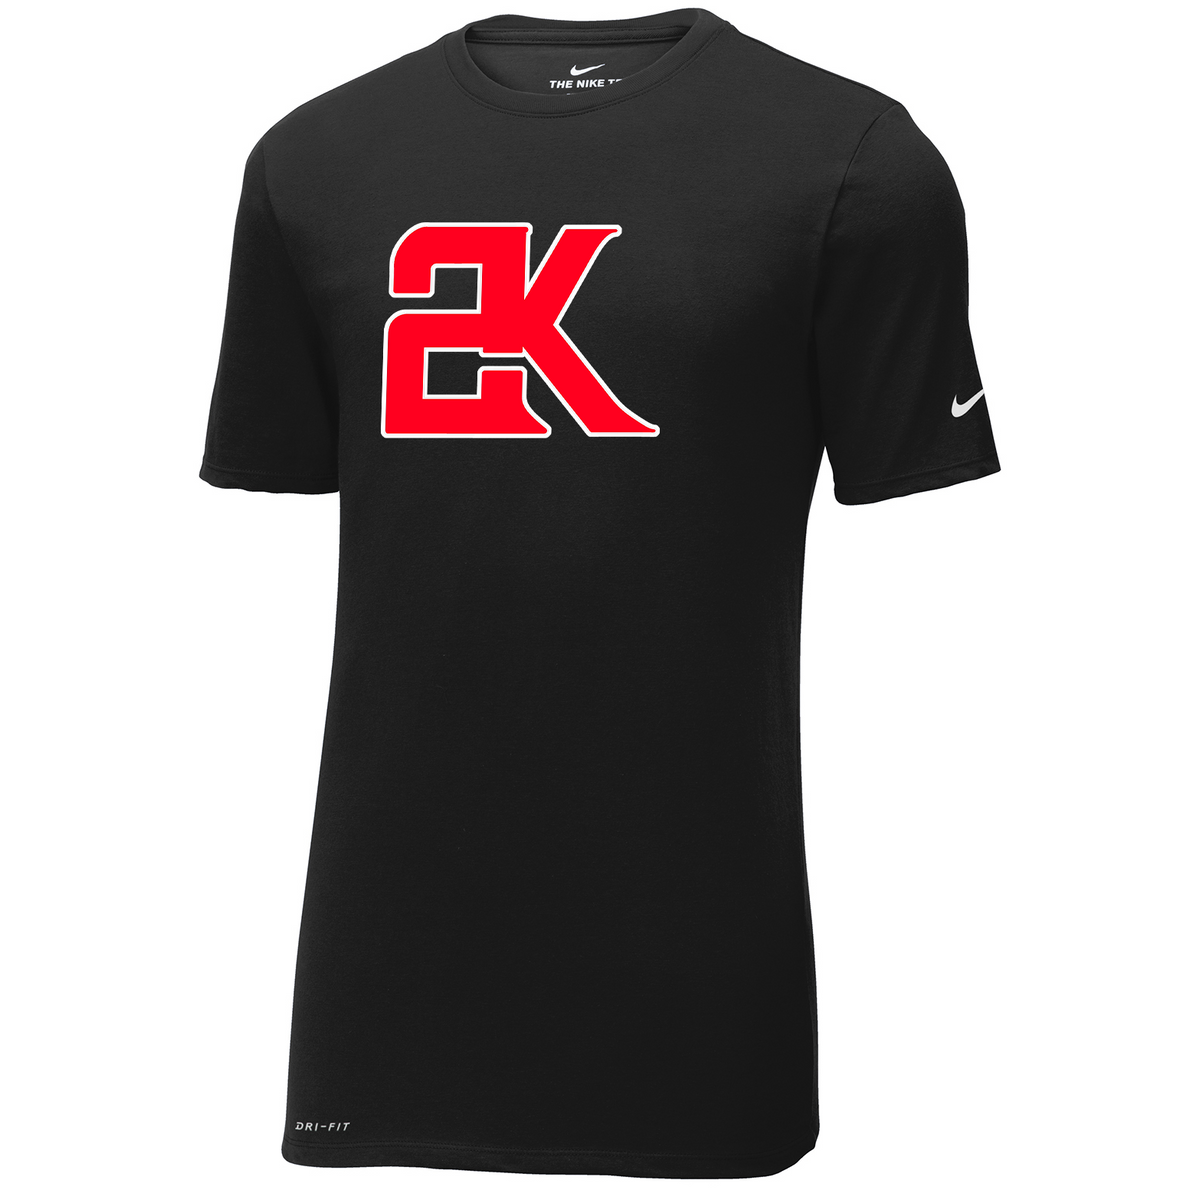 2K Softball Nike Dri-FIT Tee